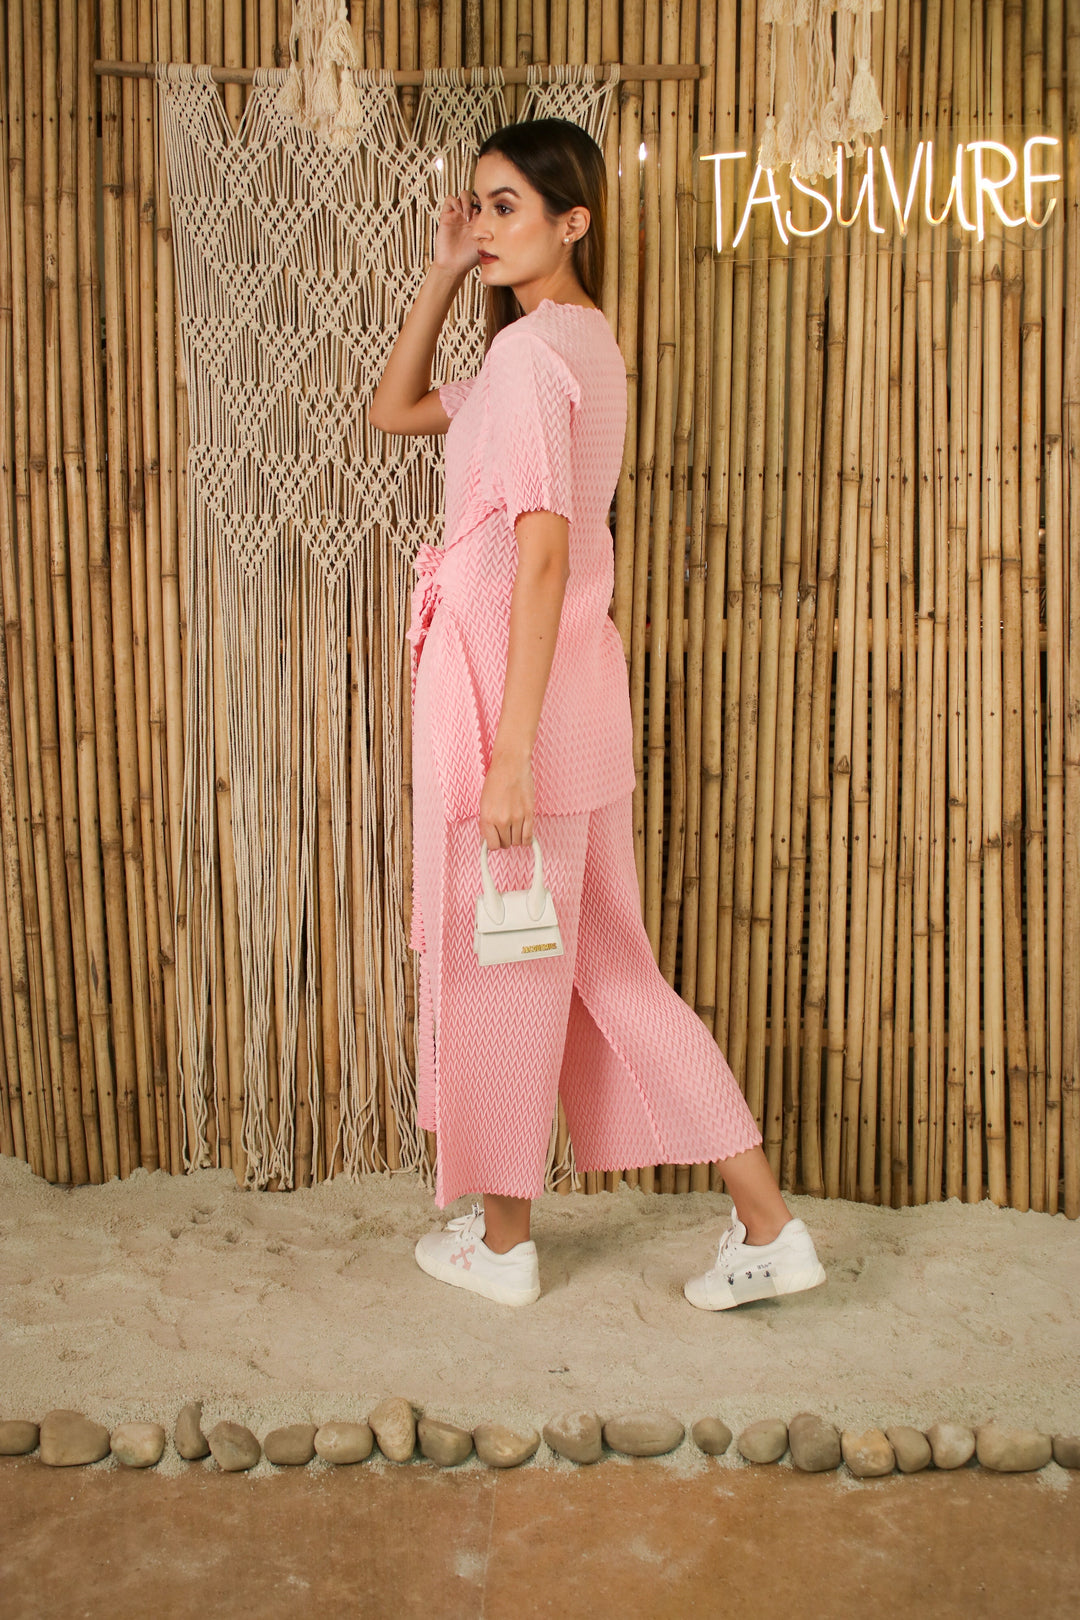 Buy Designer Pleated Pink Smocked Short Sleeves Top & Wide Leg Pant Set. Get Exclusive Co Ord Sets Online on Women's Top Clothing Website Tasuvure